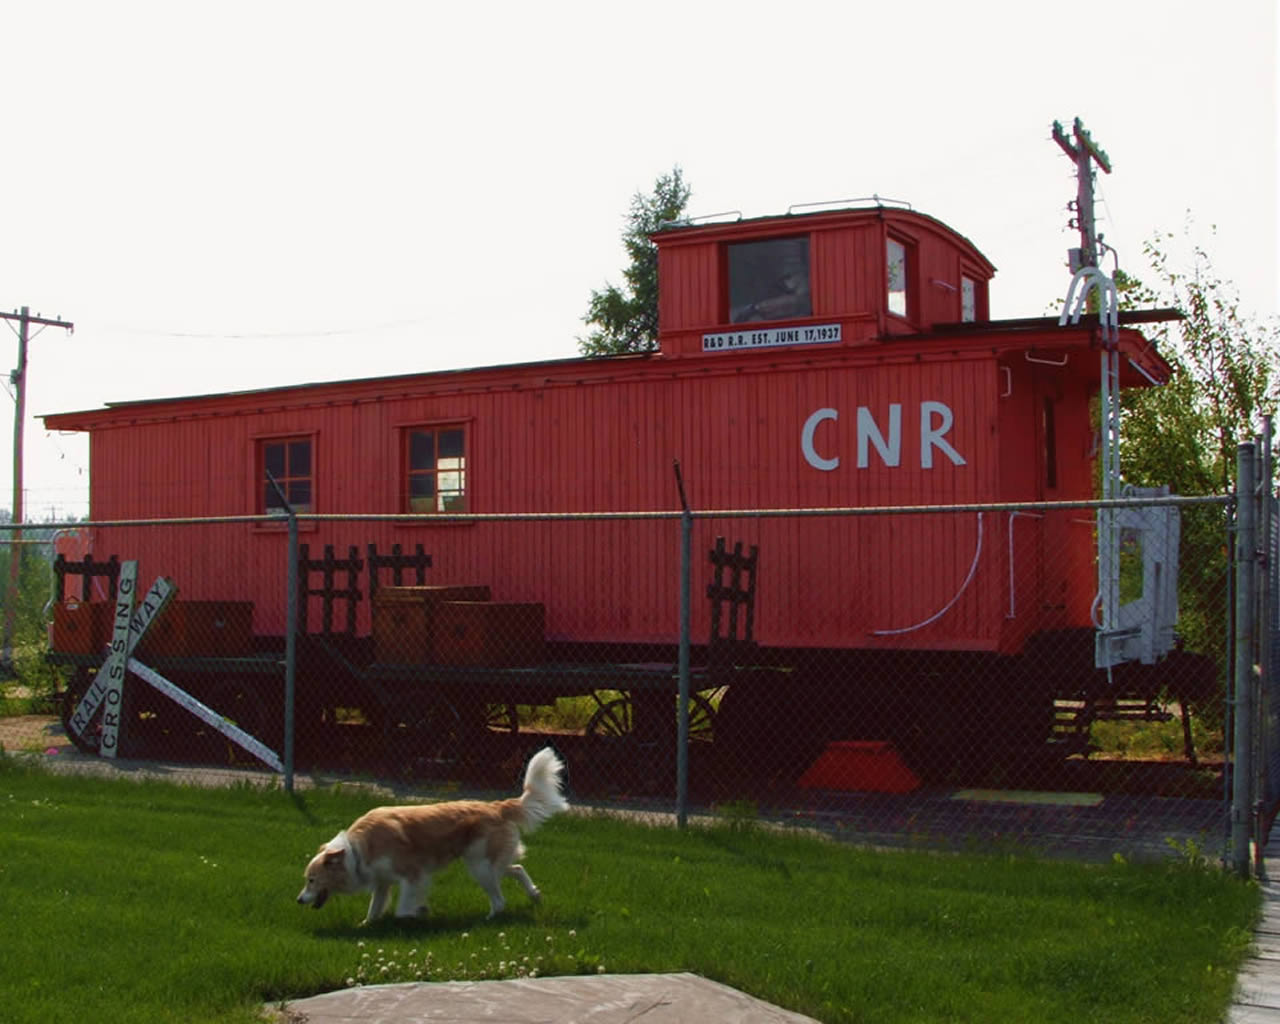 cnr-wooden-caboose (1280x1024)